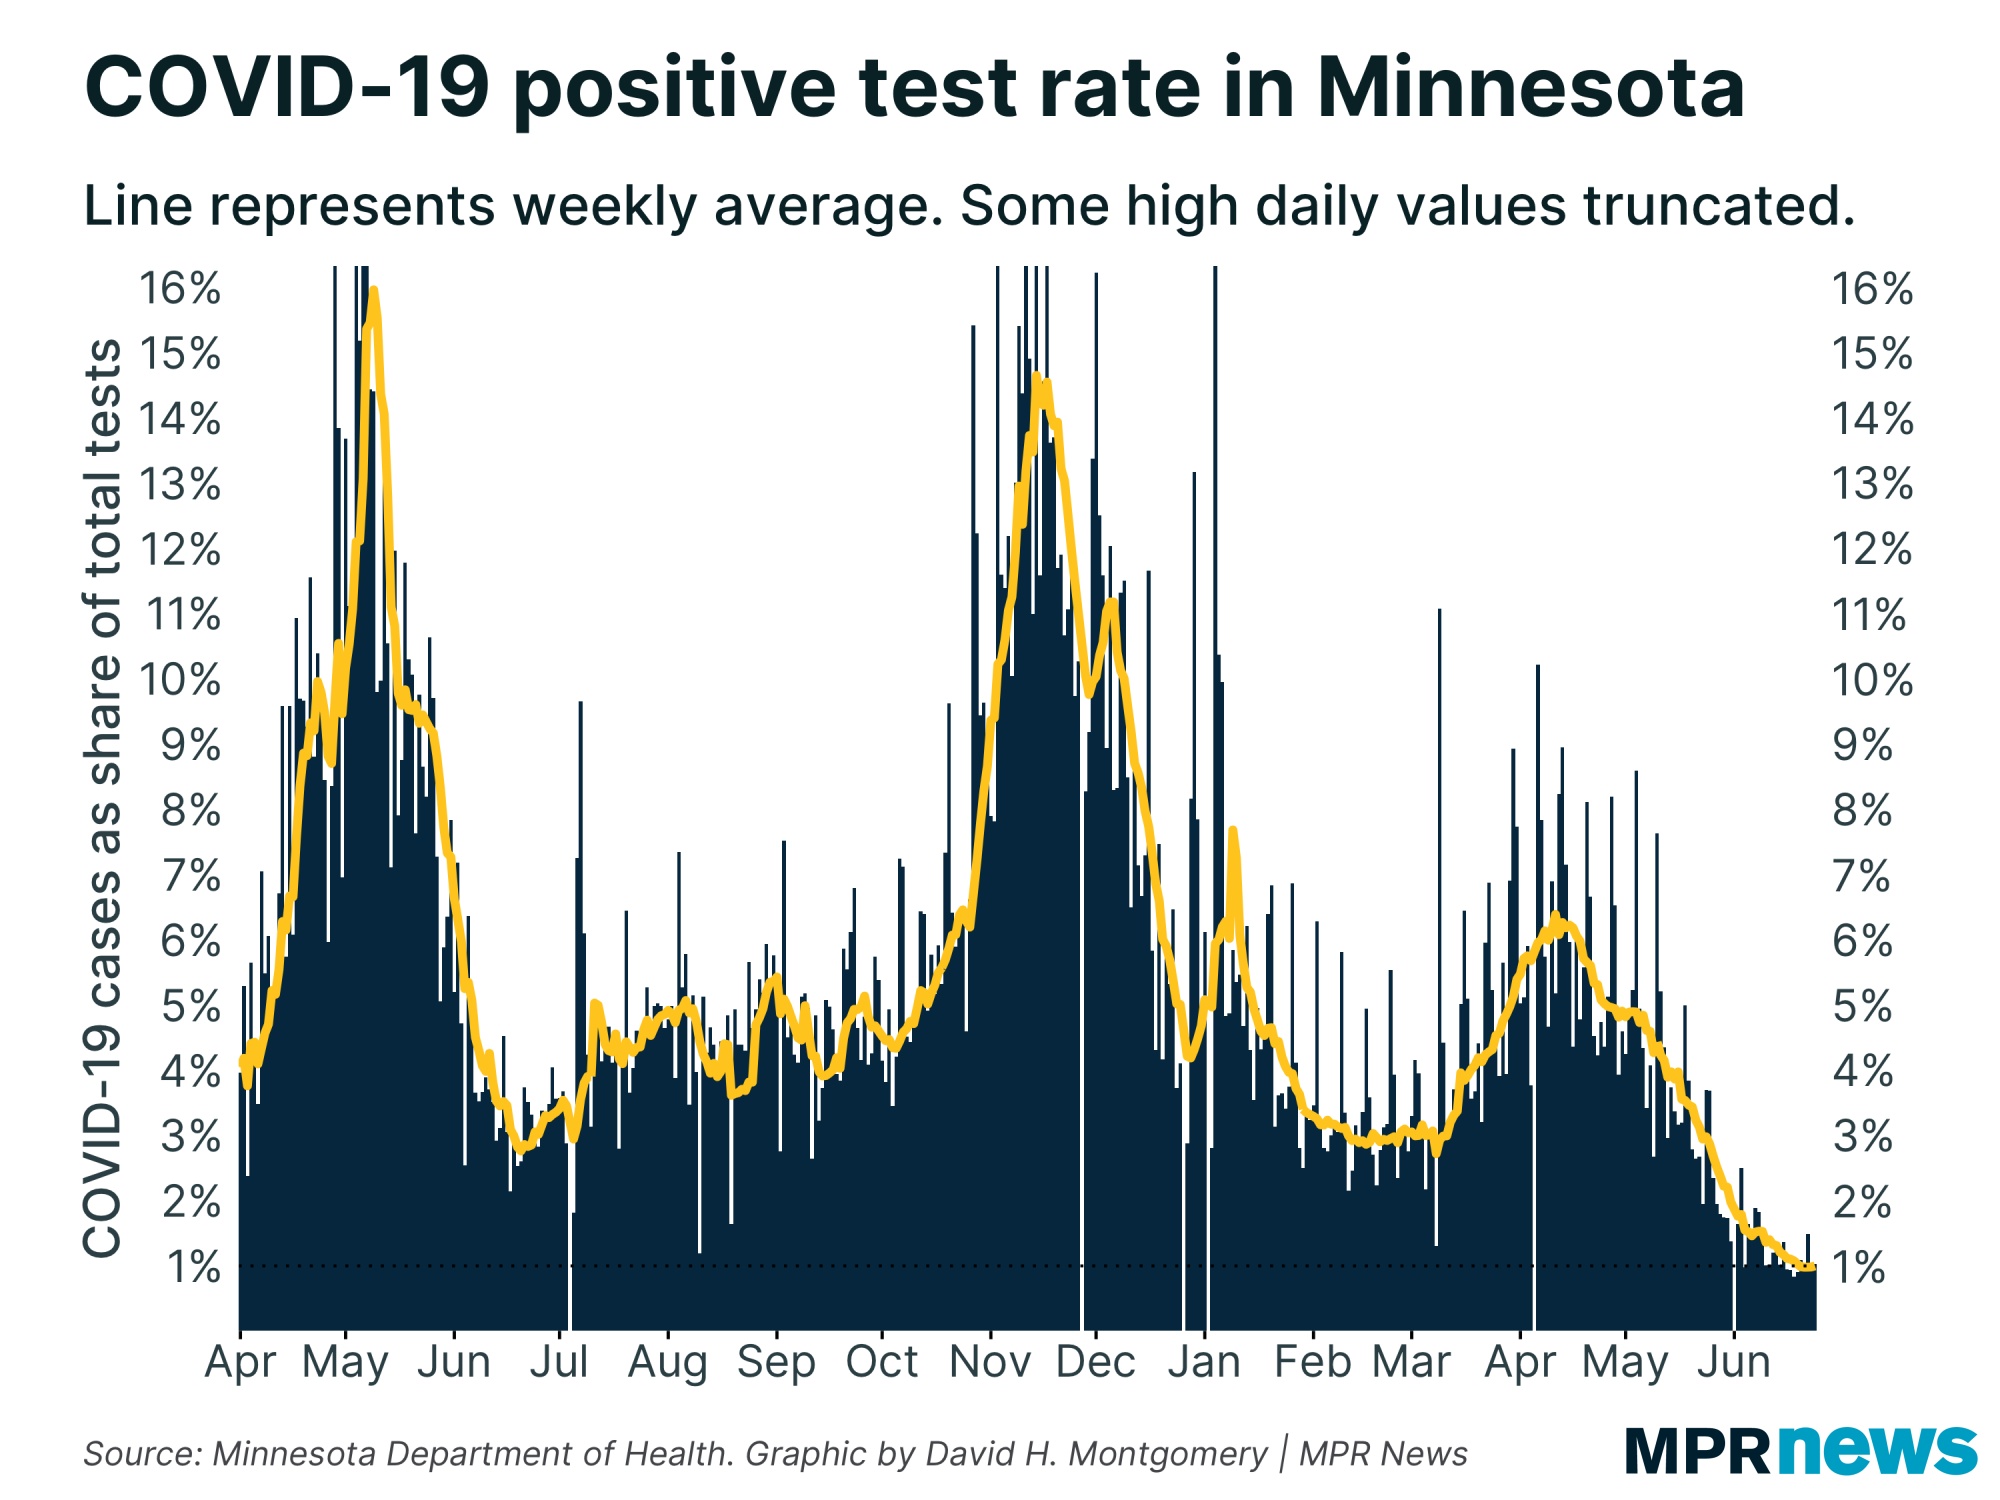 COVID-19 positivity rate in Minnesota